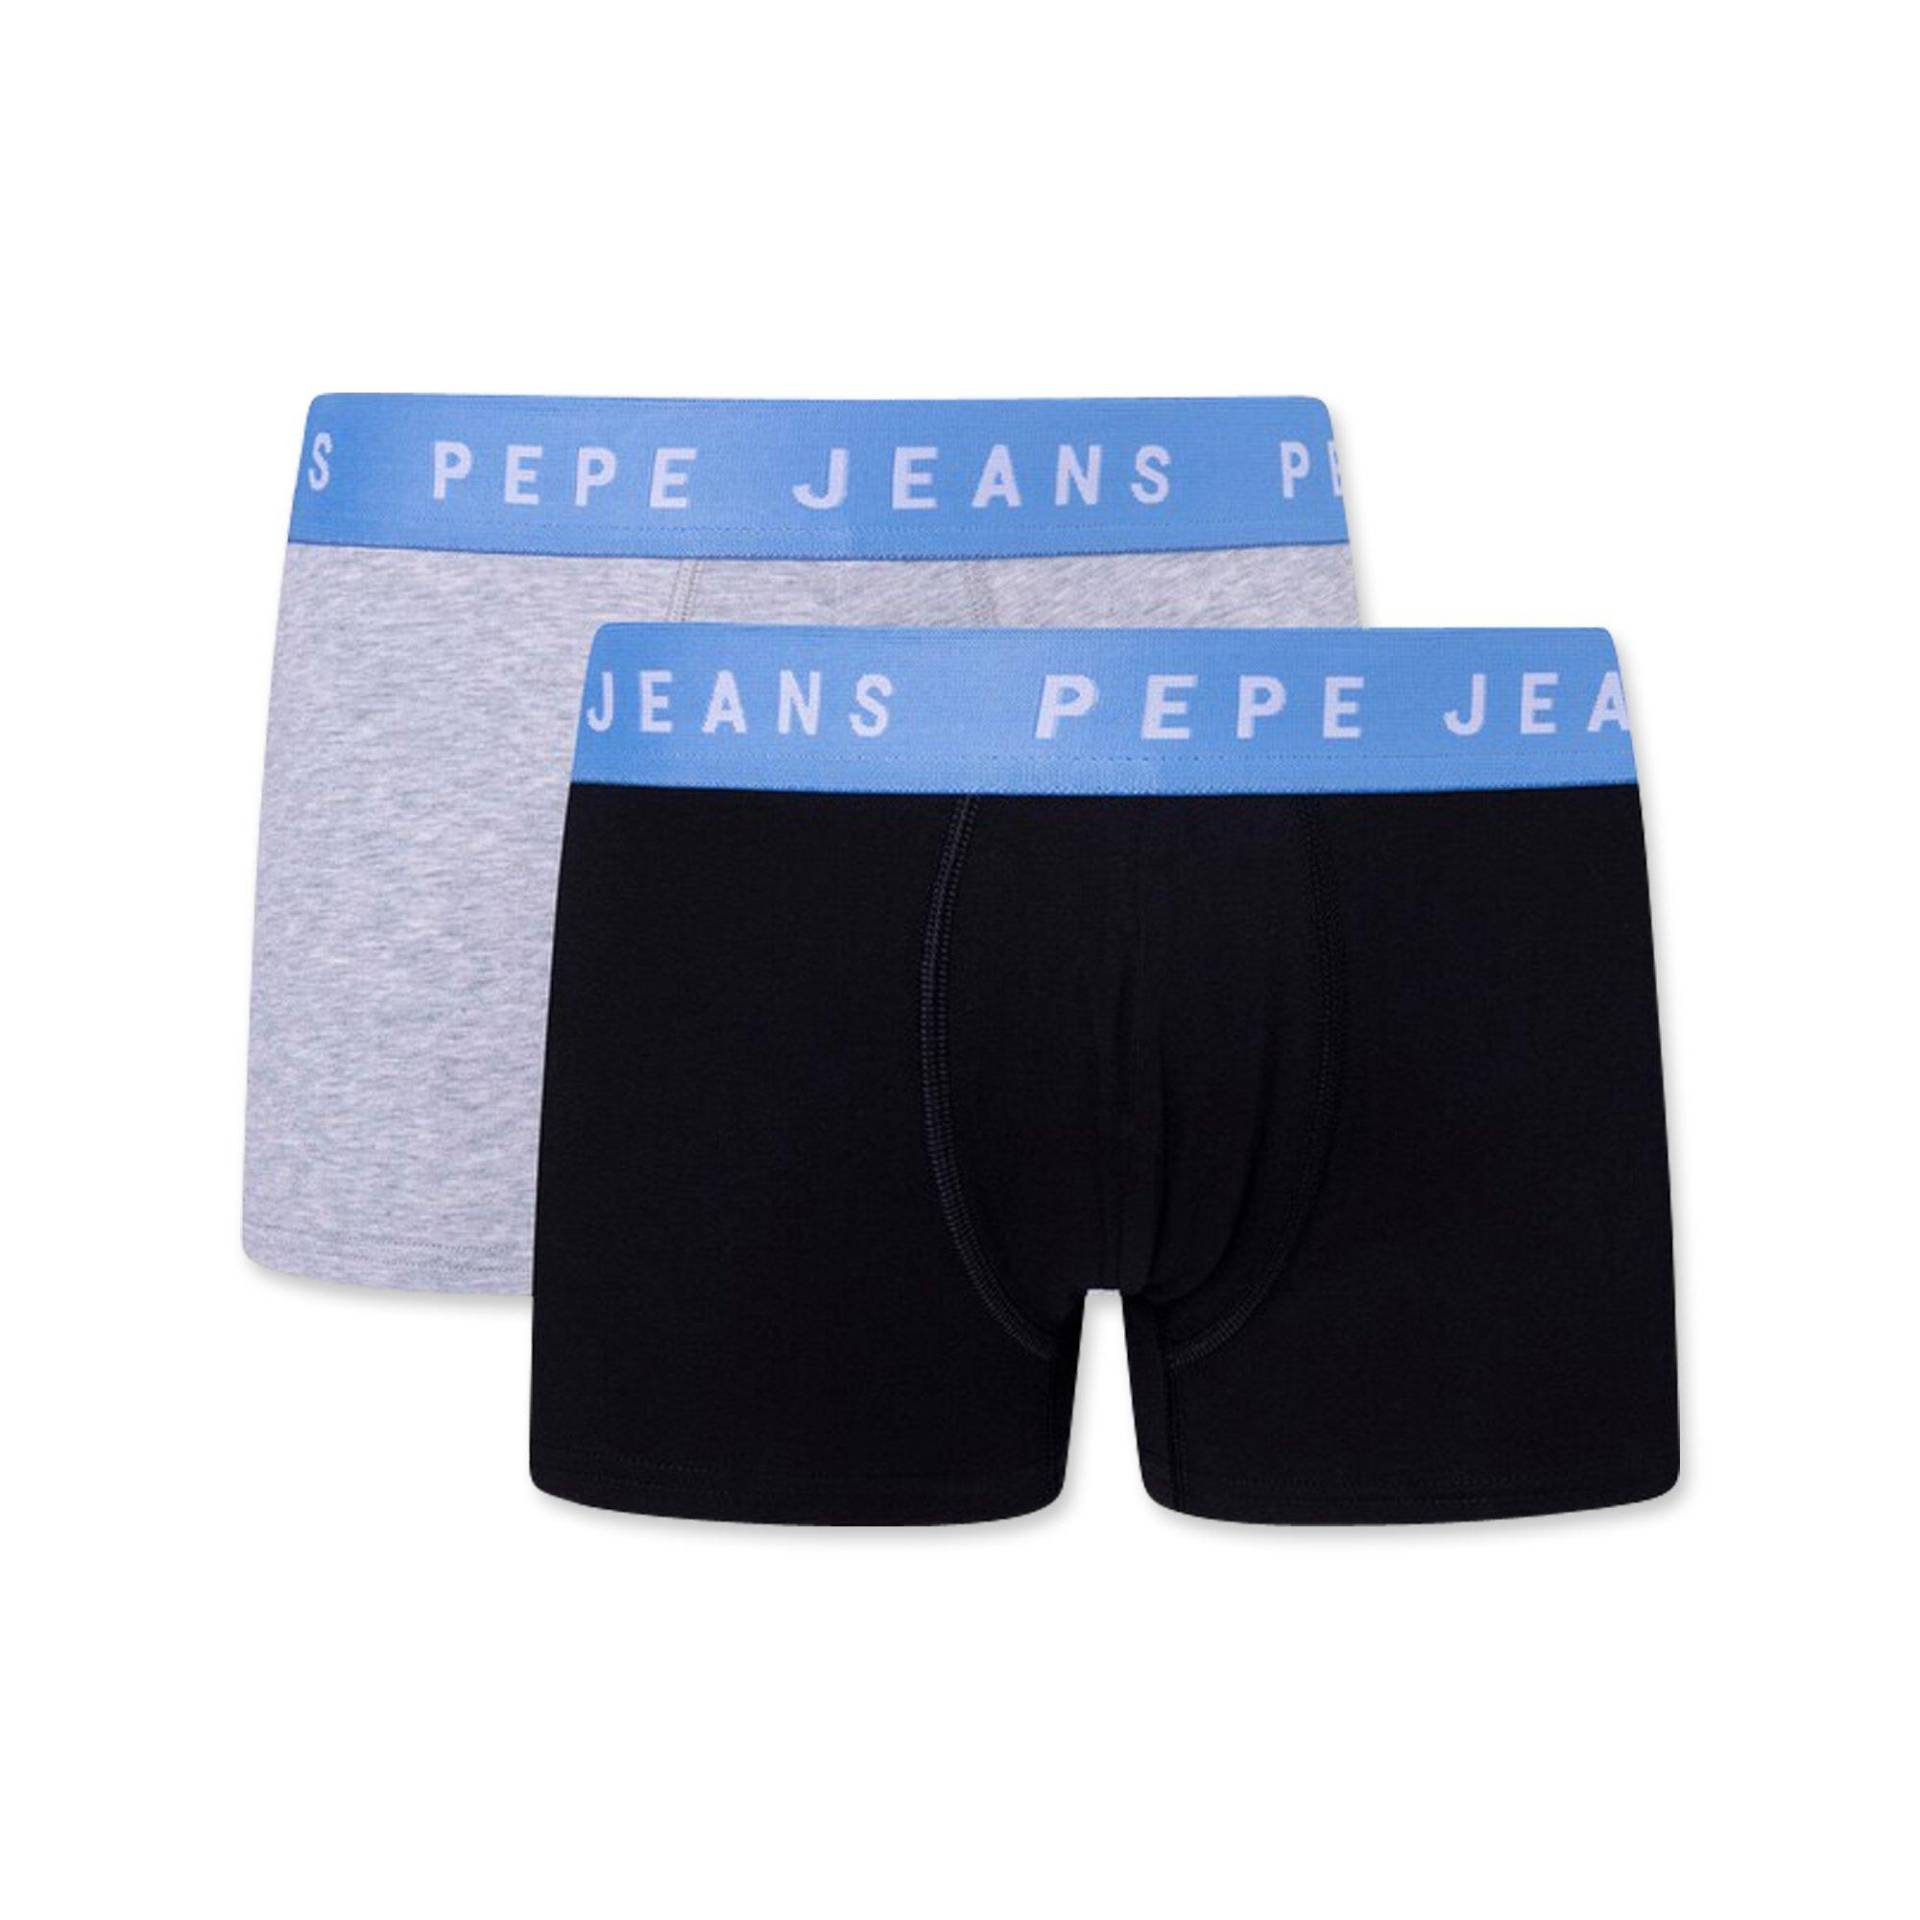 Duopack, Pantys Herren Black L von Pepe Jeans